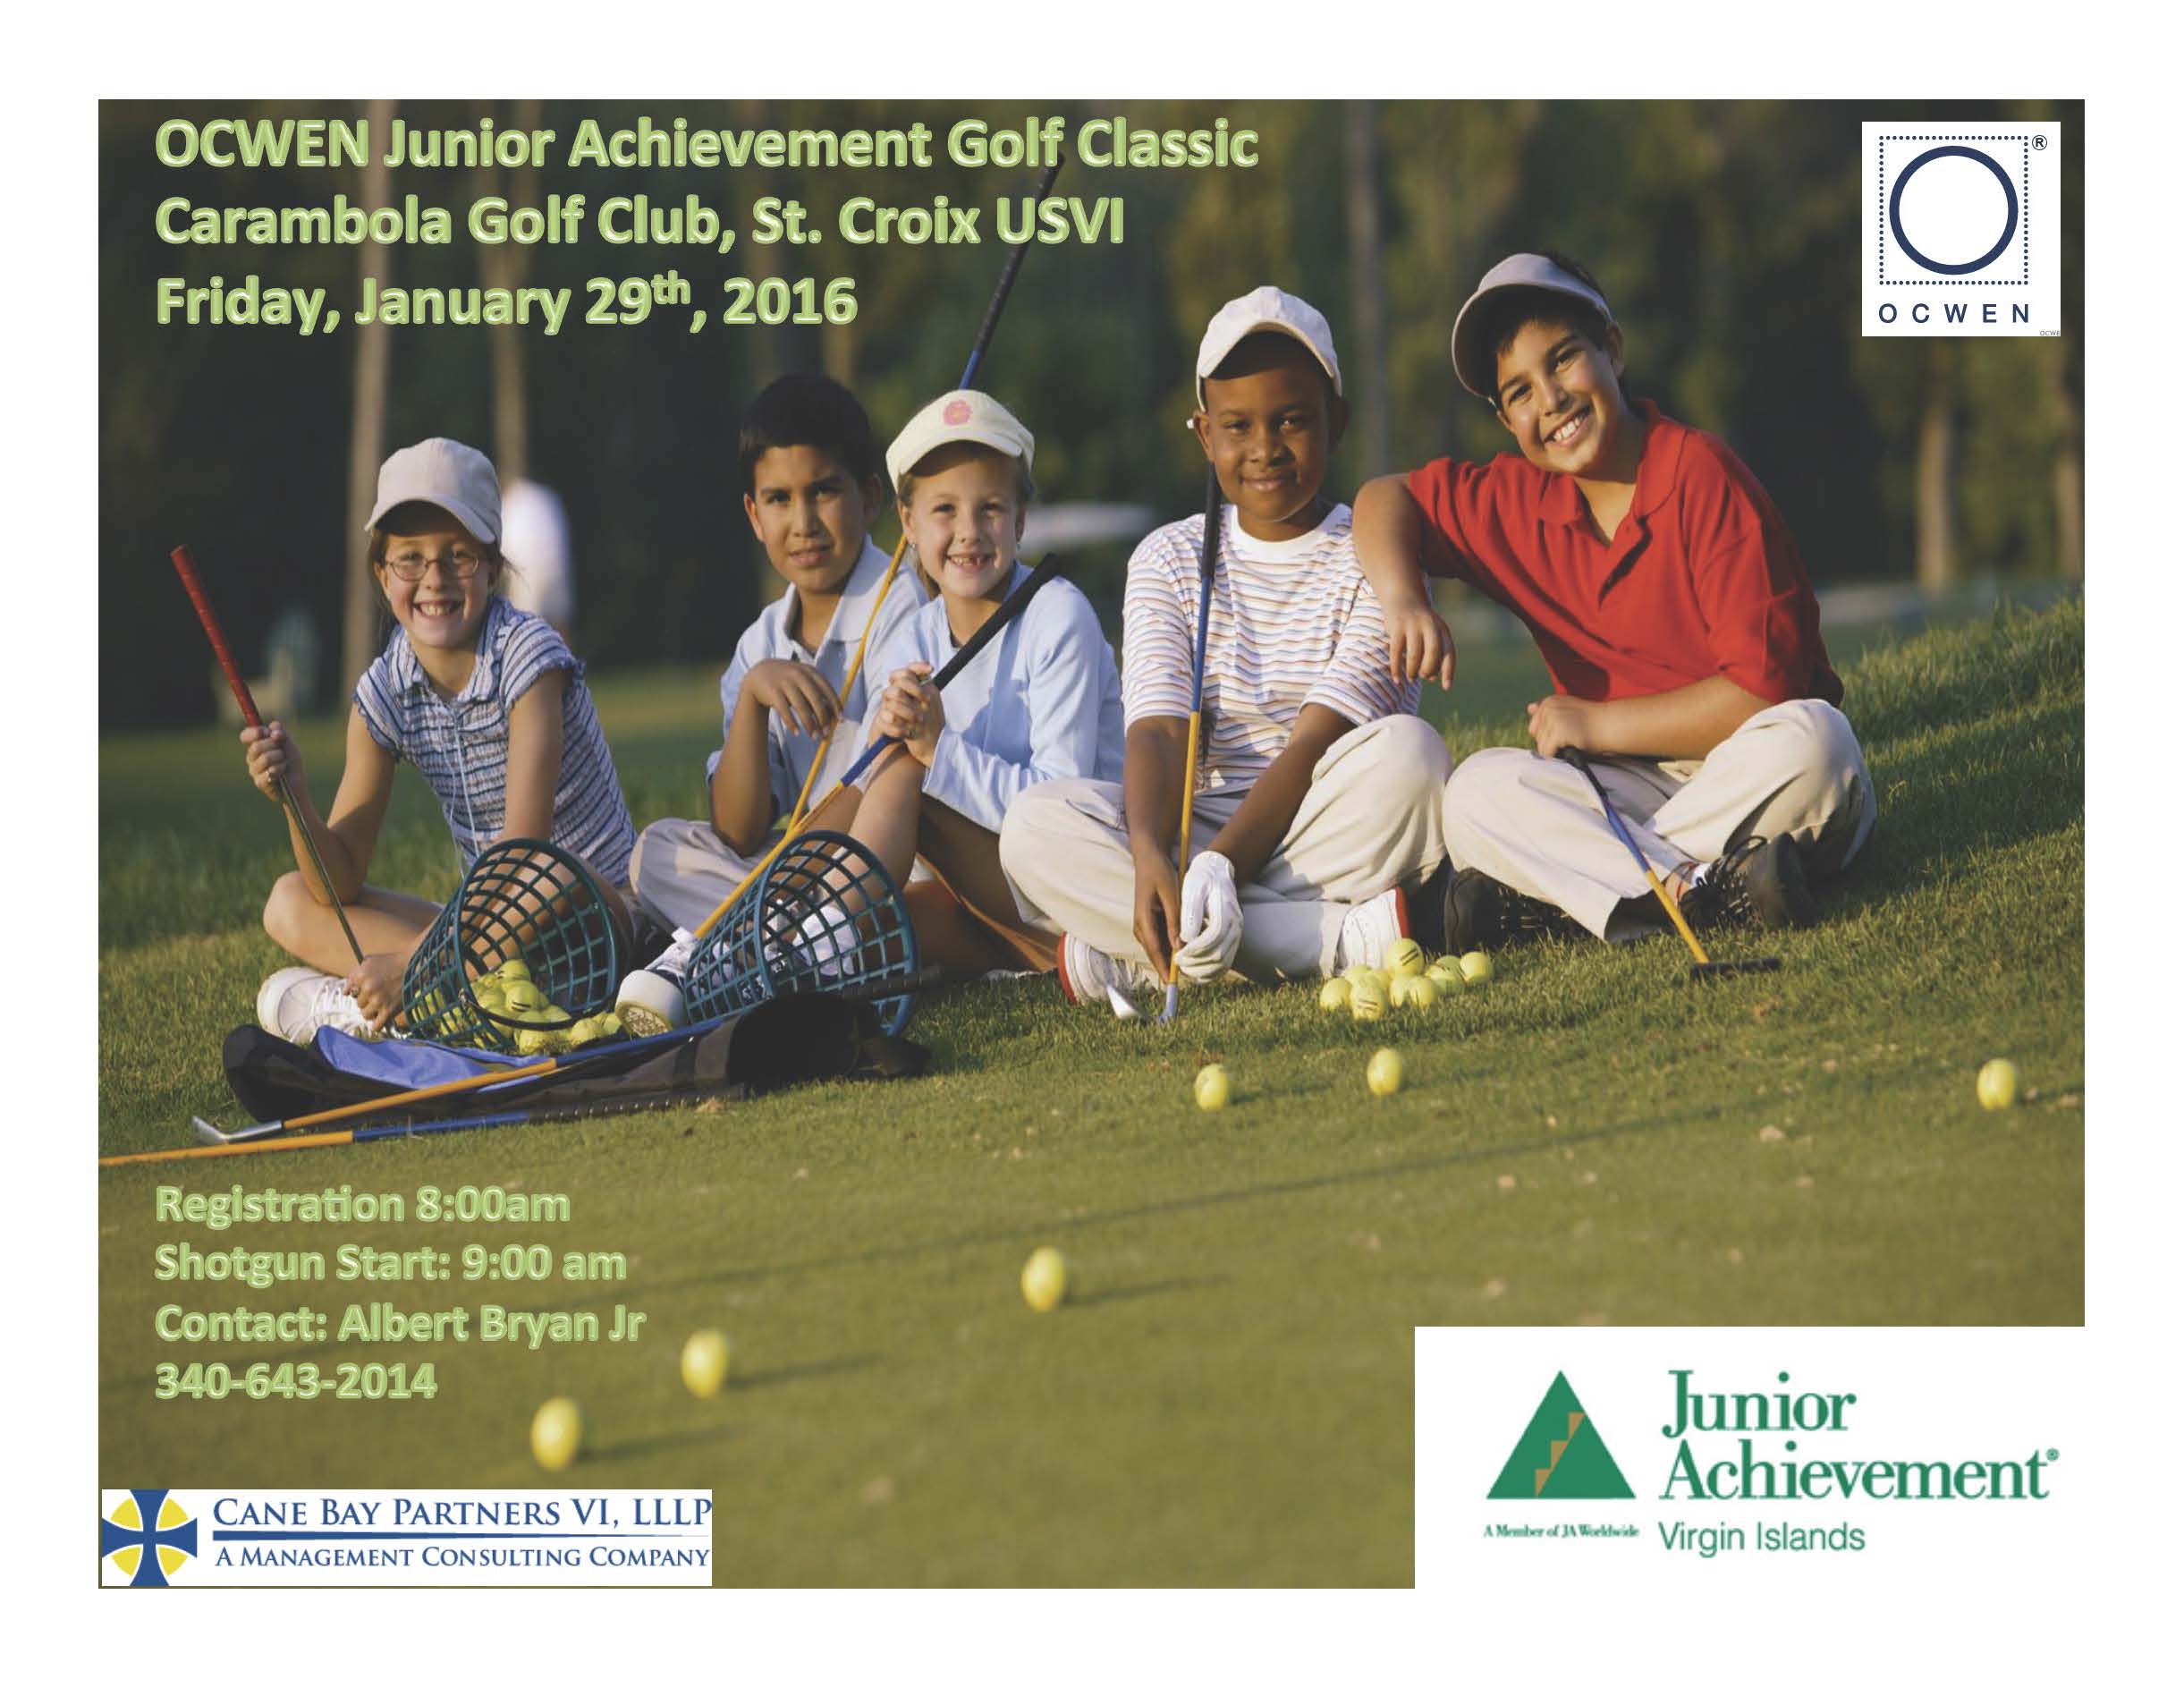 Cane Bay Partners VI, LLLP Sponsors Junior Achievement Golf Tournament